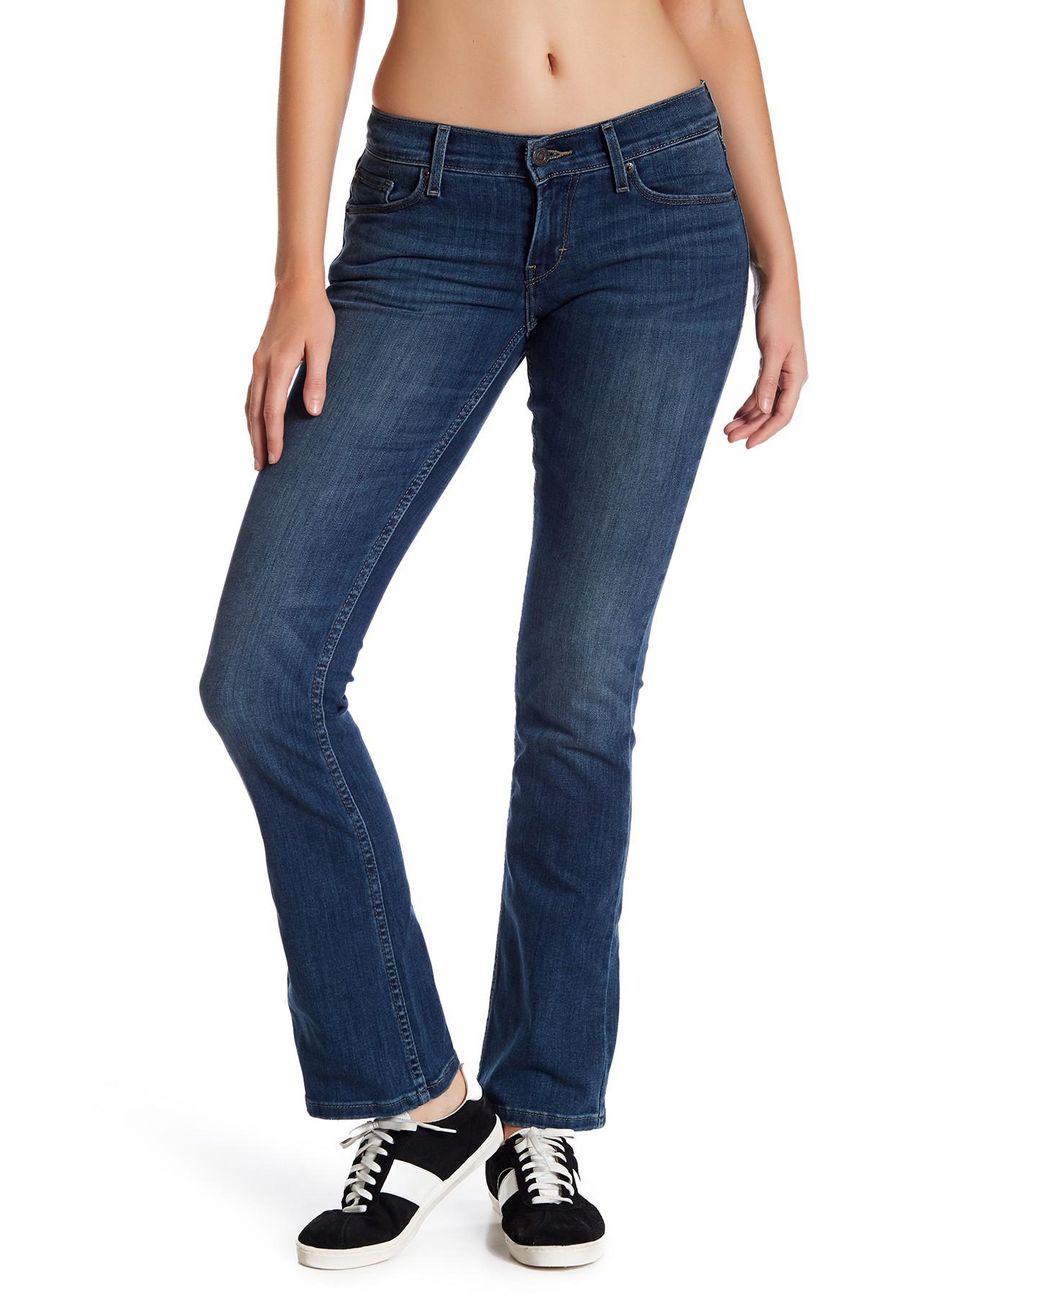 Introducir 67+ imagen levi’s superlow 524 jeans